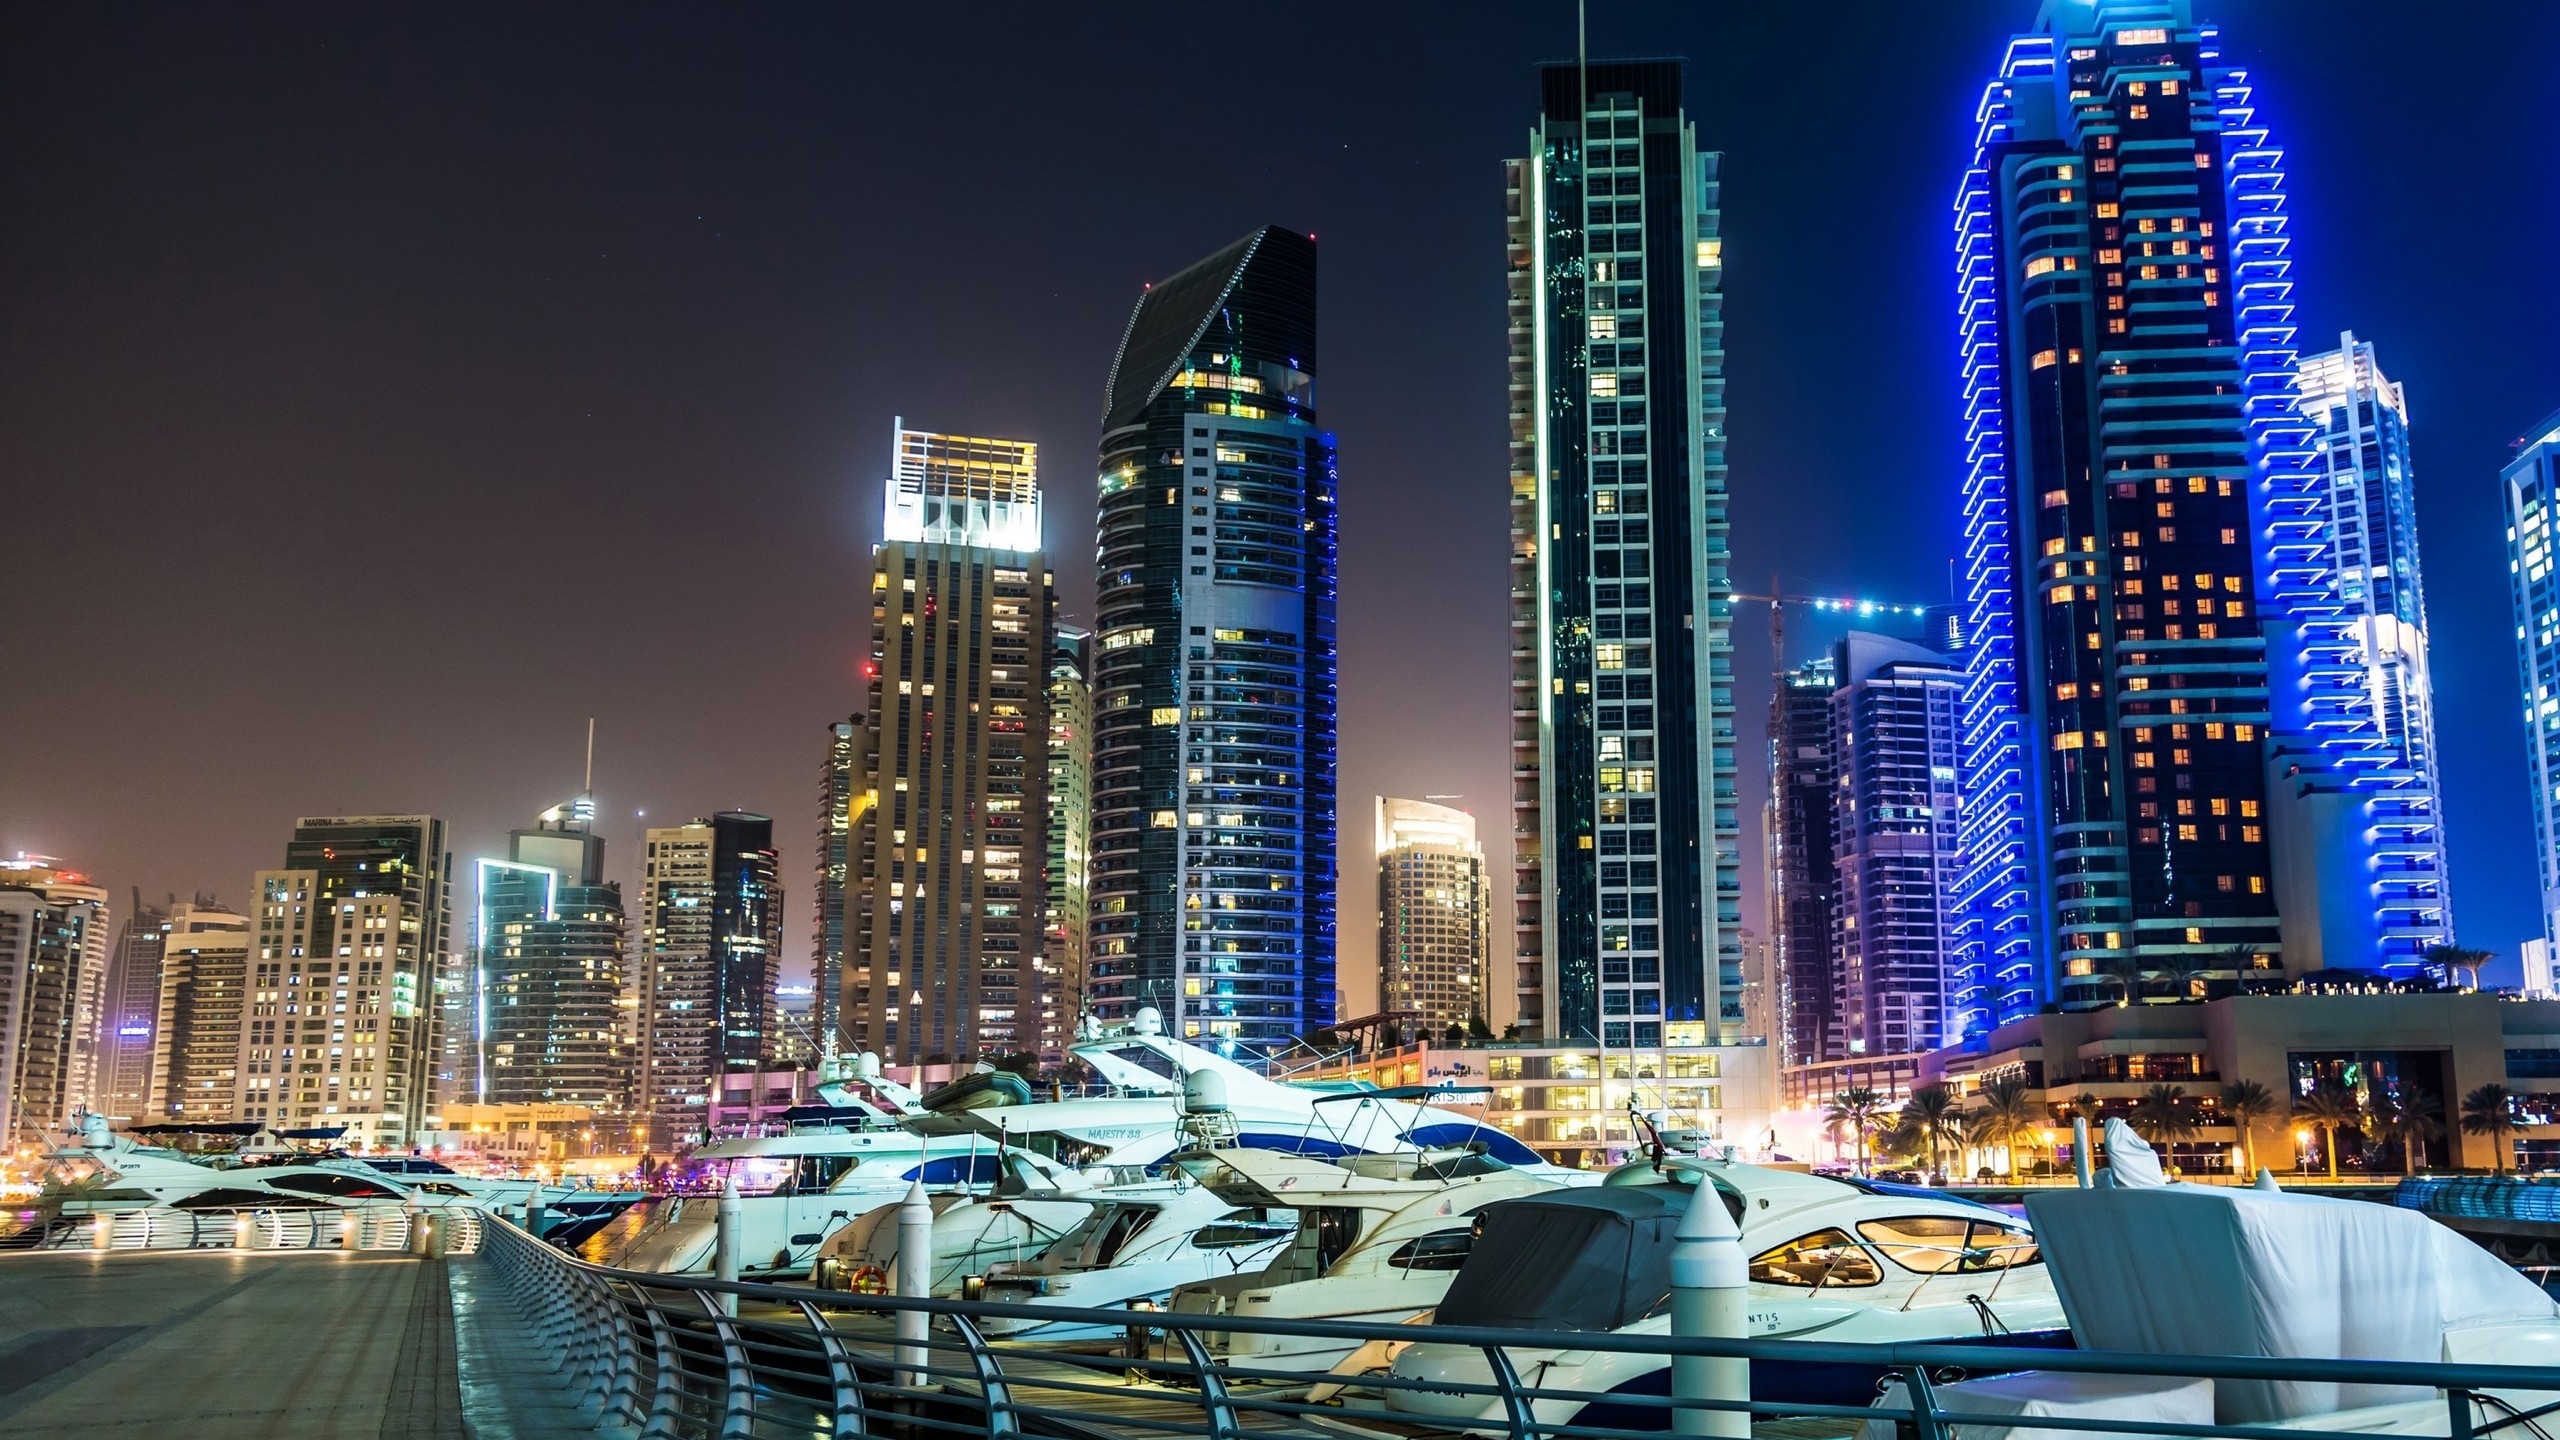 Dubai Marina View for 2560x1440 HDTV resolution